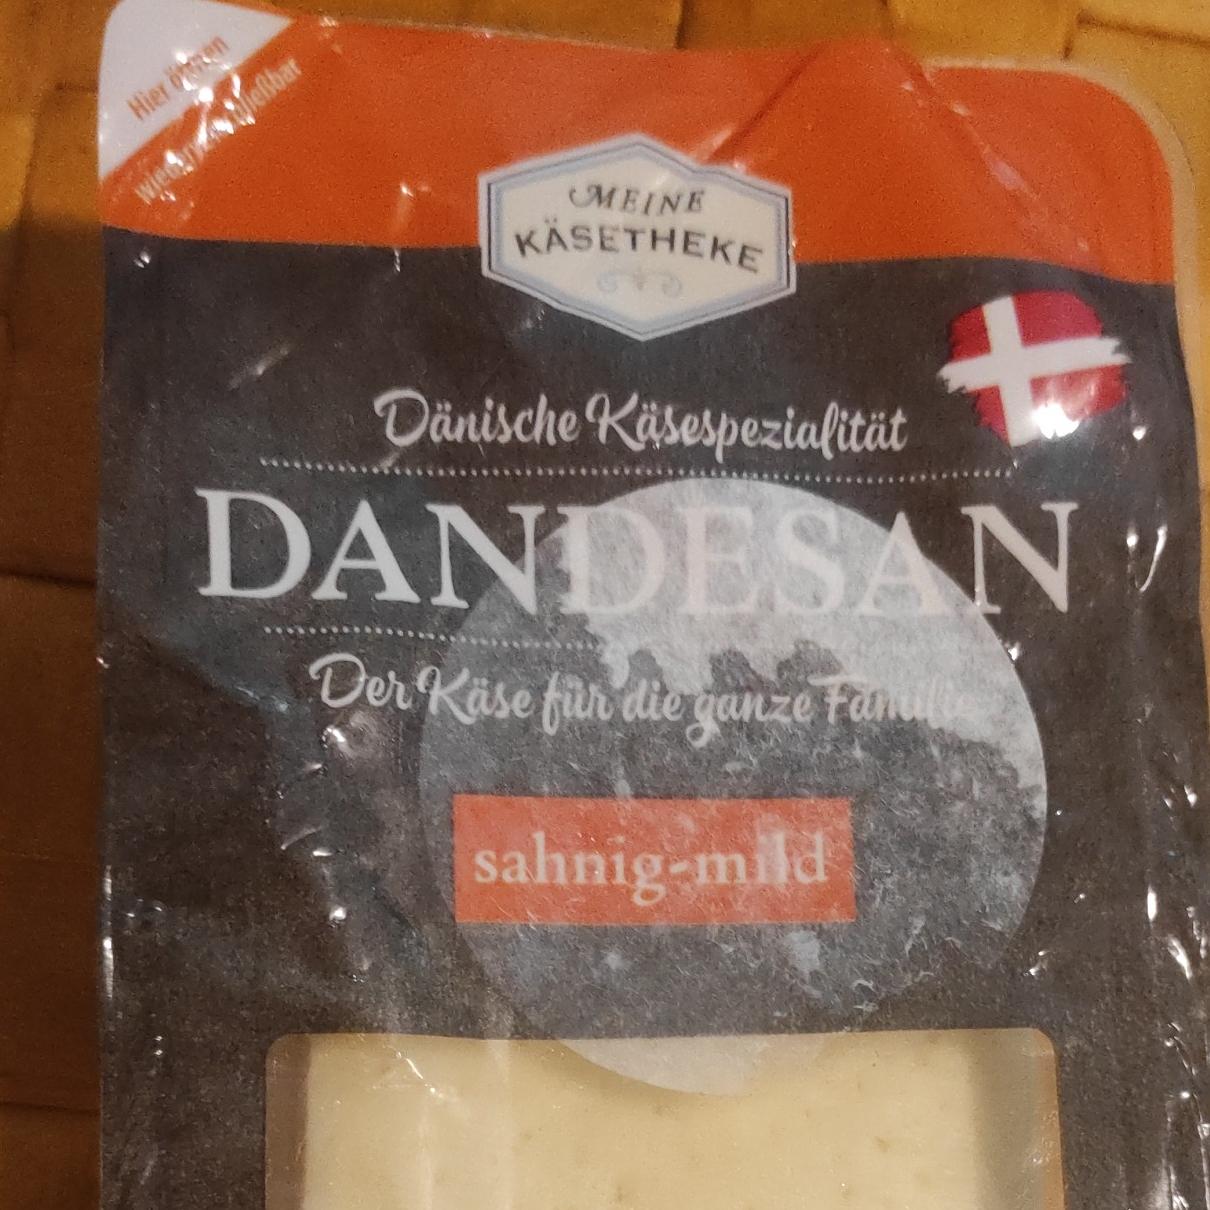 Fotografie - Dänische Käsespezialität Dandesan sahnig-mild Meine Käsetheke